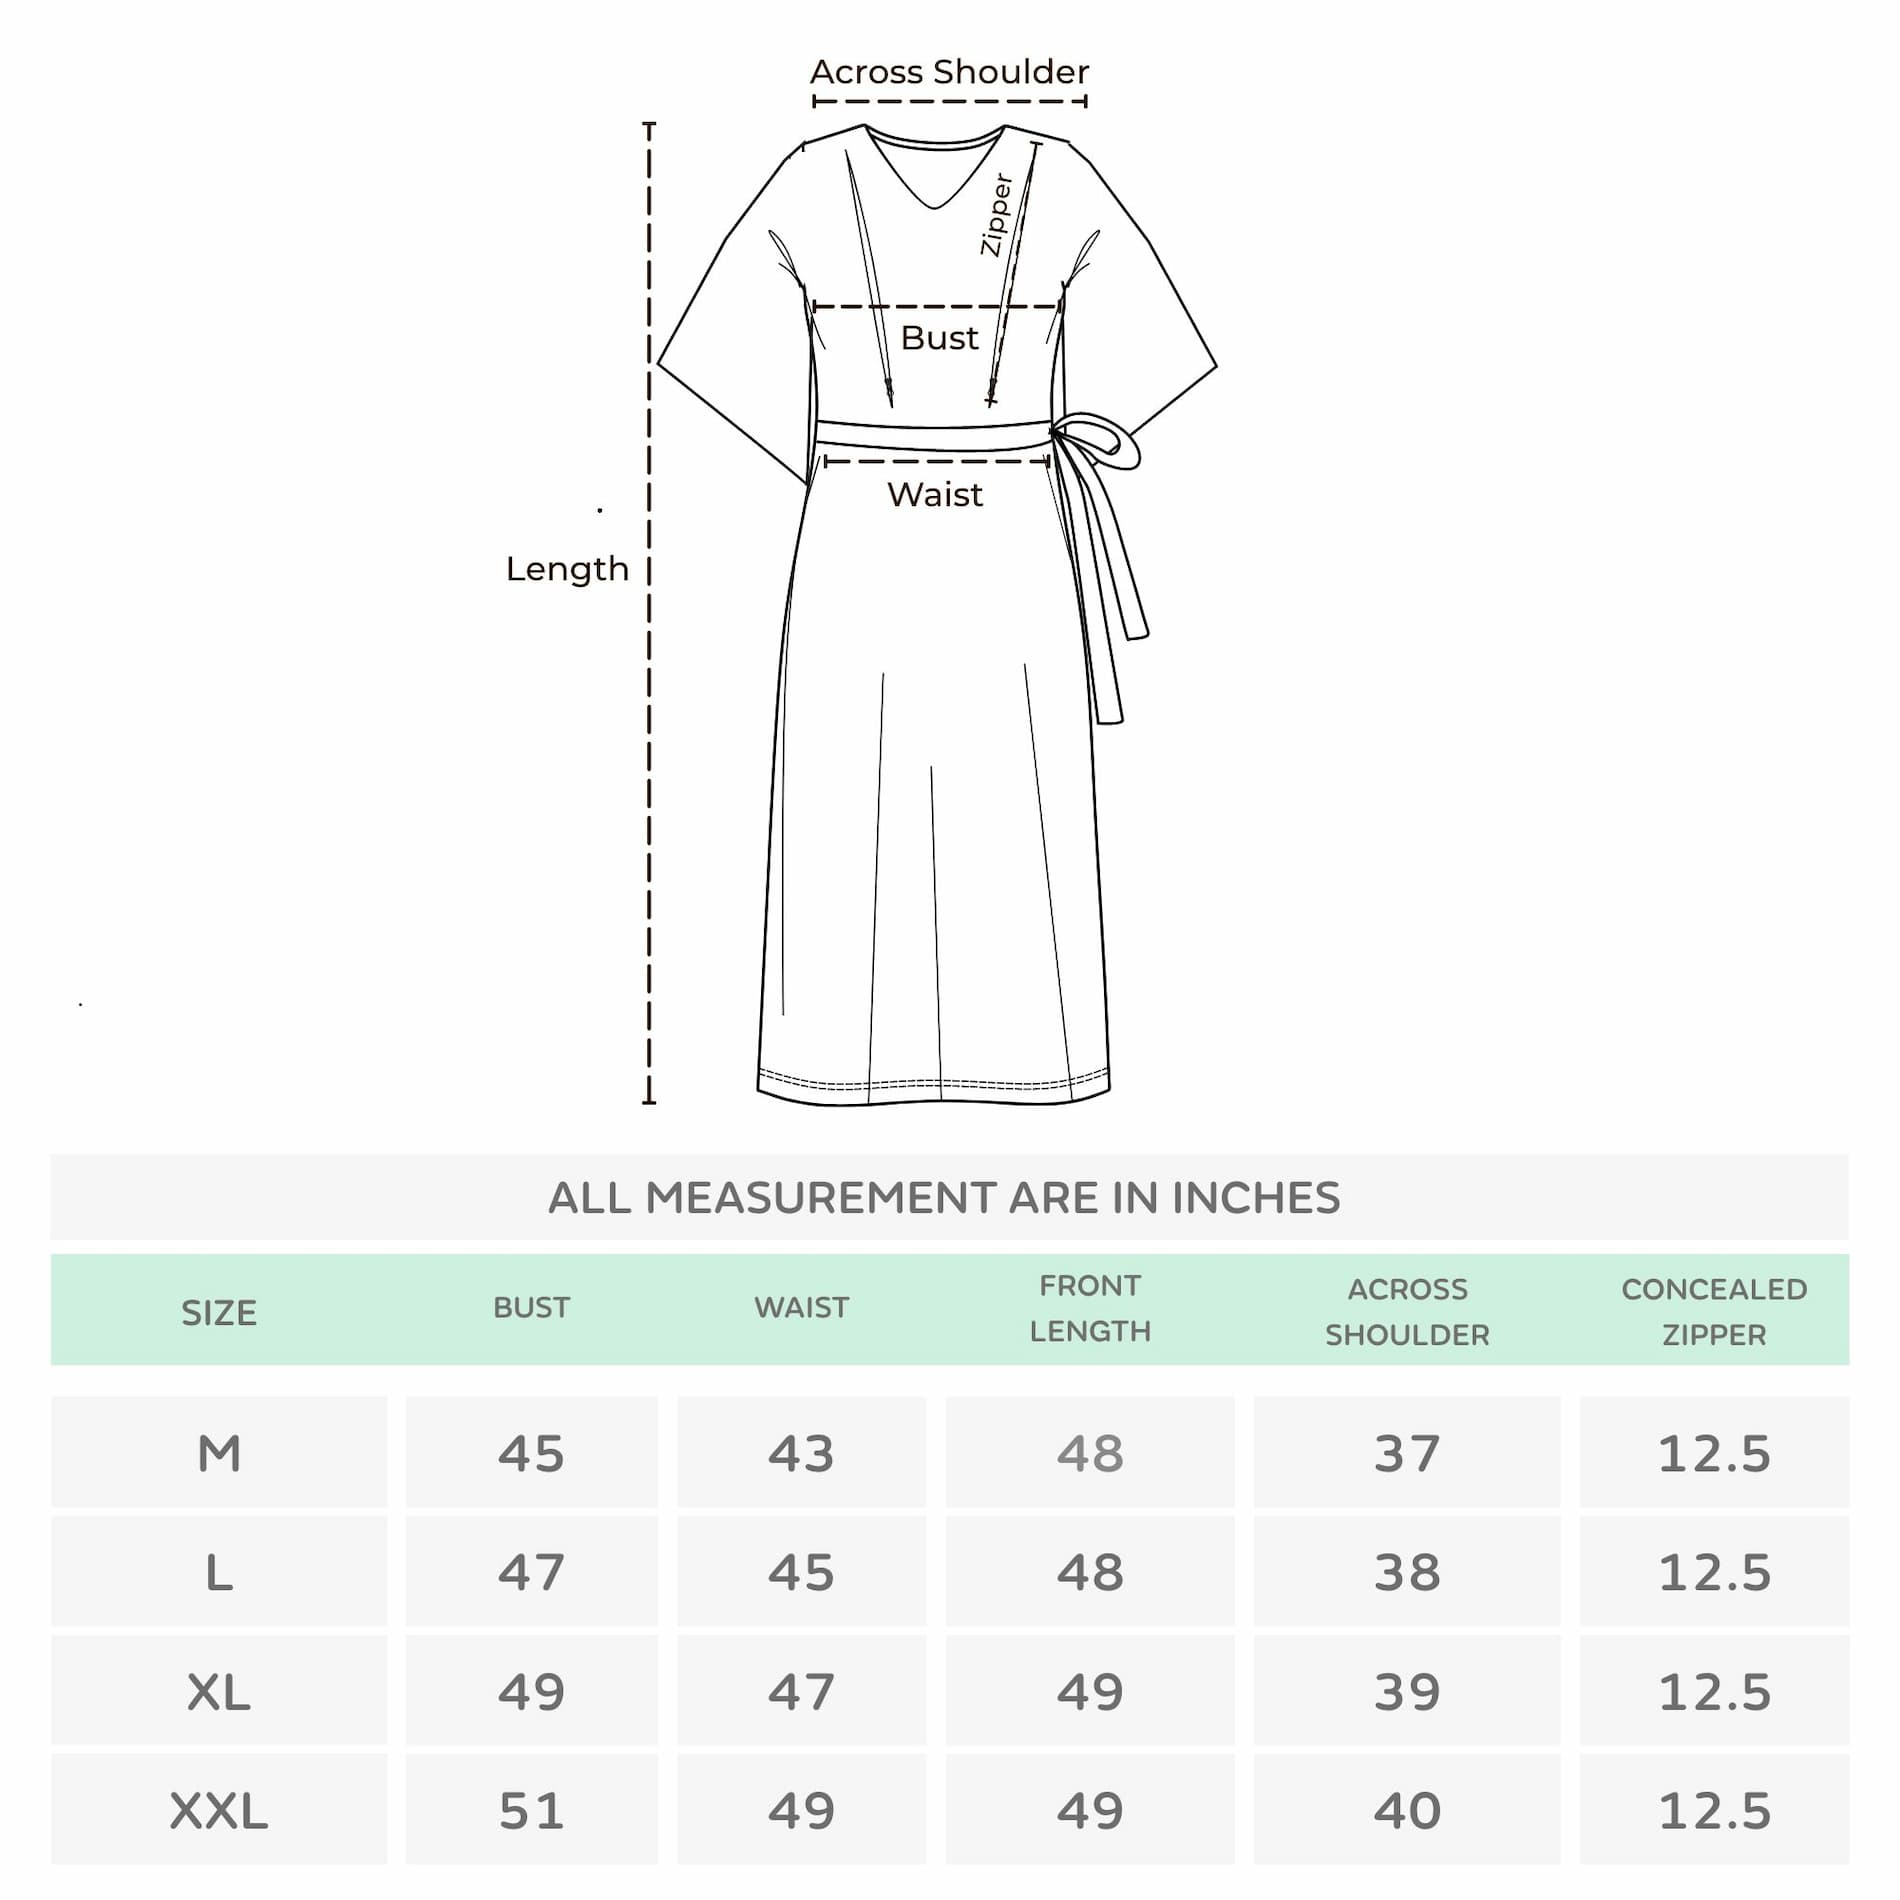 Mylo Pre & Post Maternity /Nursing Kaftan Maxi Dress cum Nighty with Zipper for Easy Feeding – Shibori Print -Fuchsia–XXL 